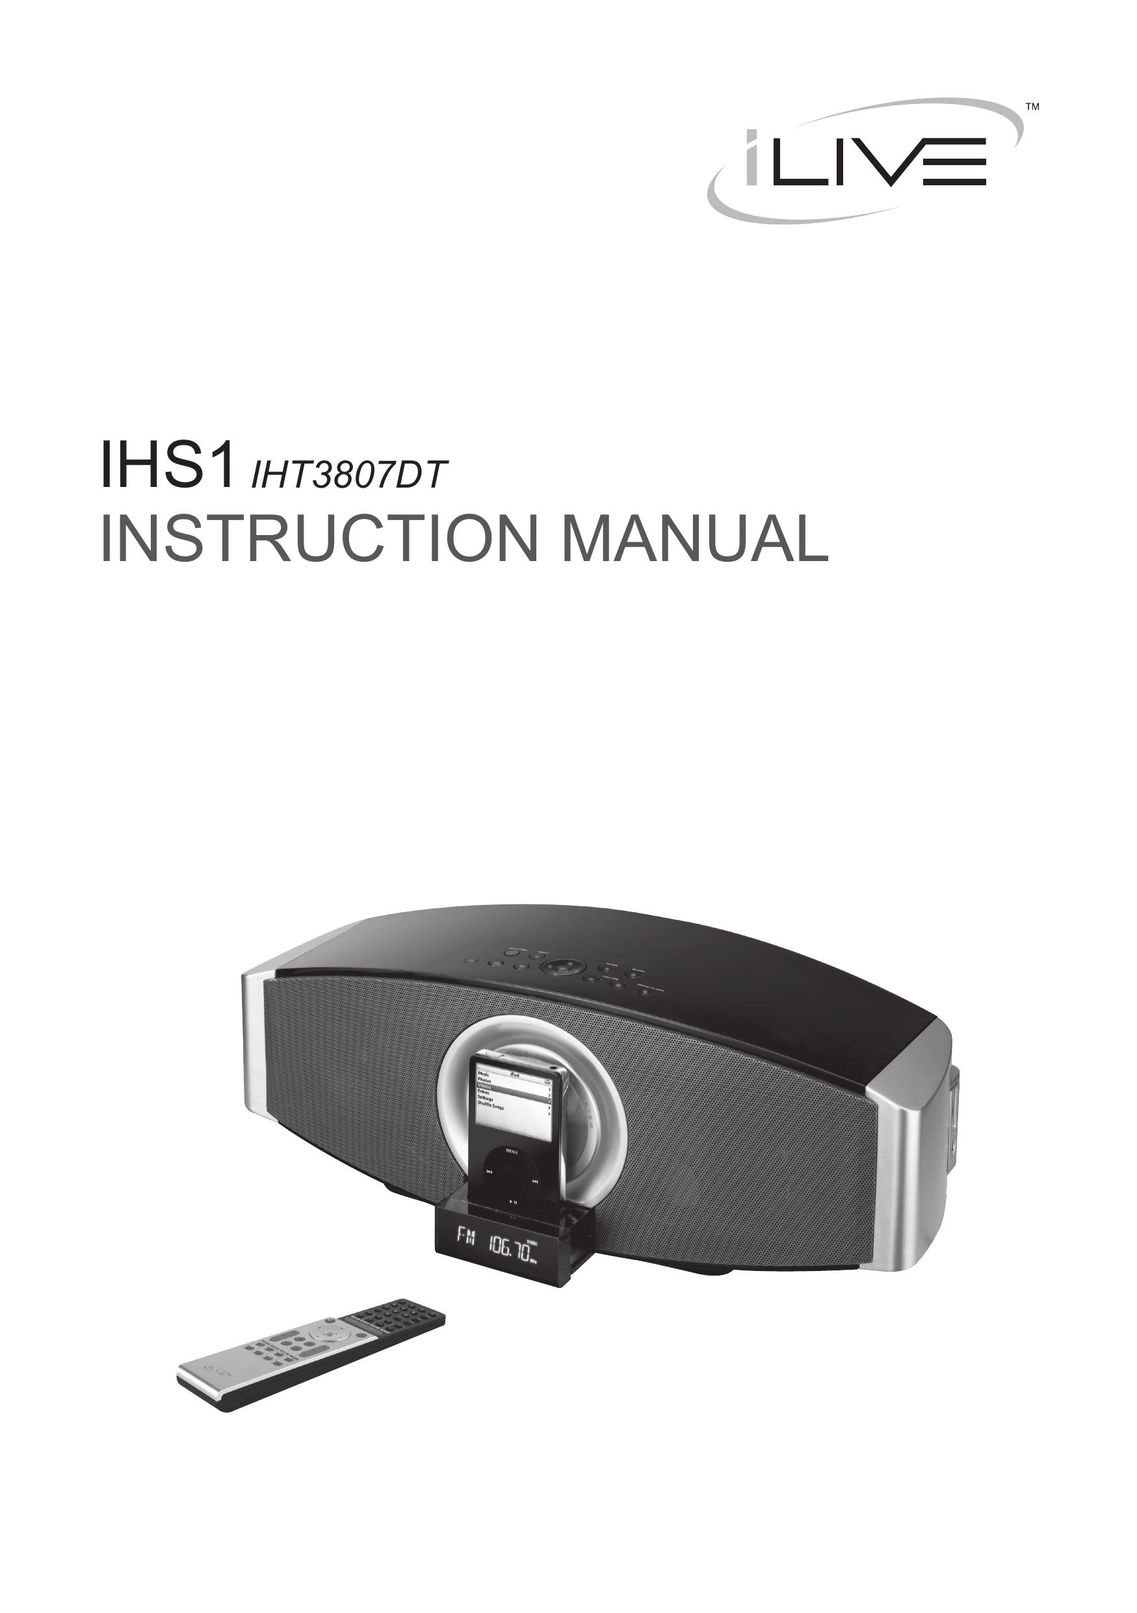 iLive IHS1 IHT3807DT Speaker User Manual